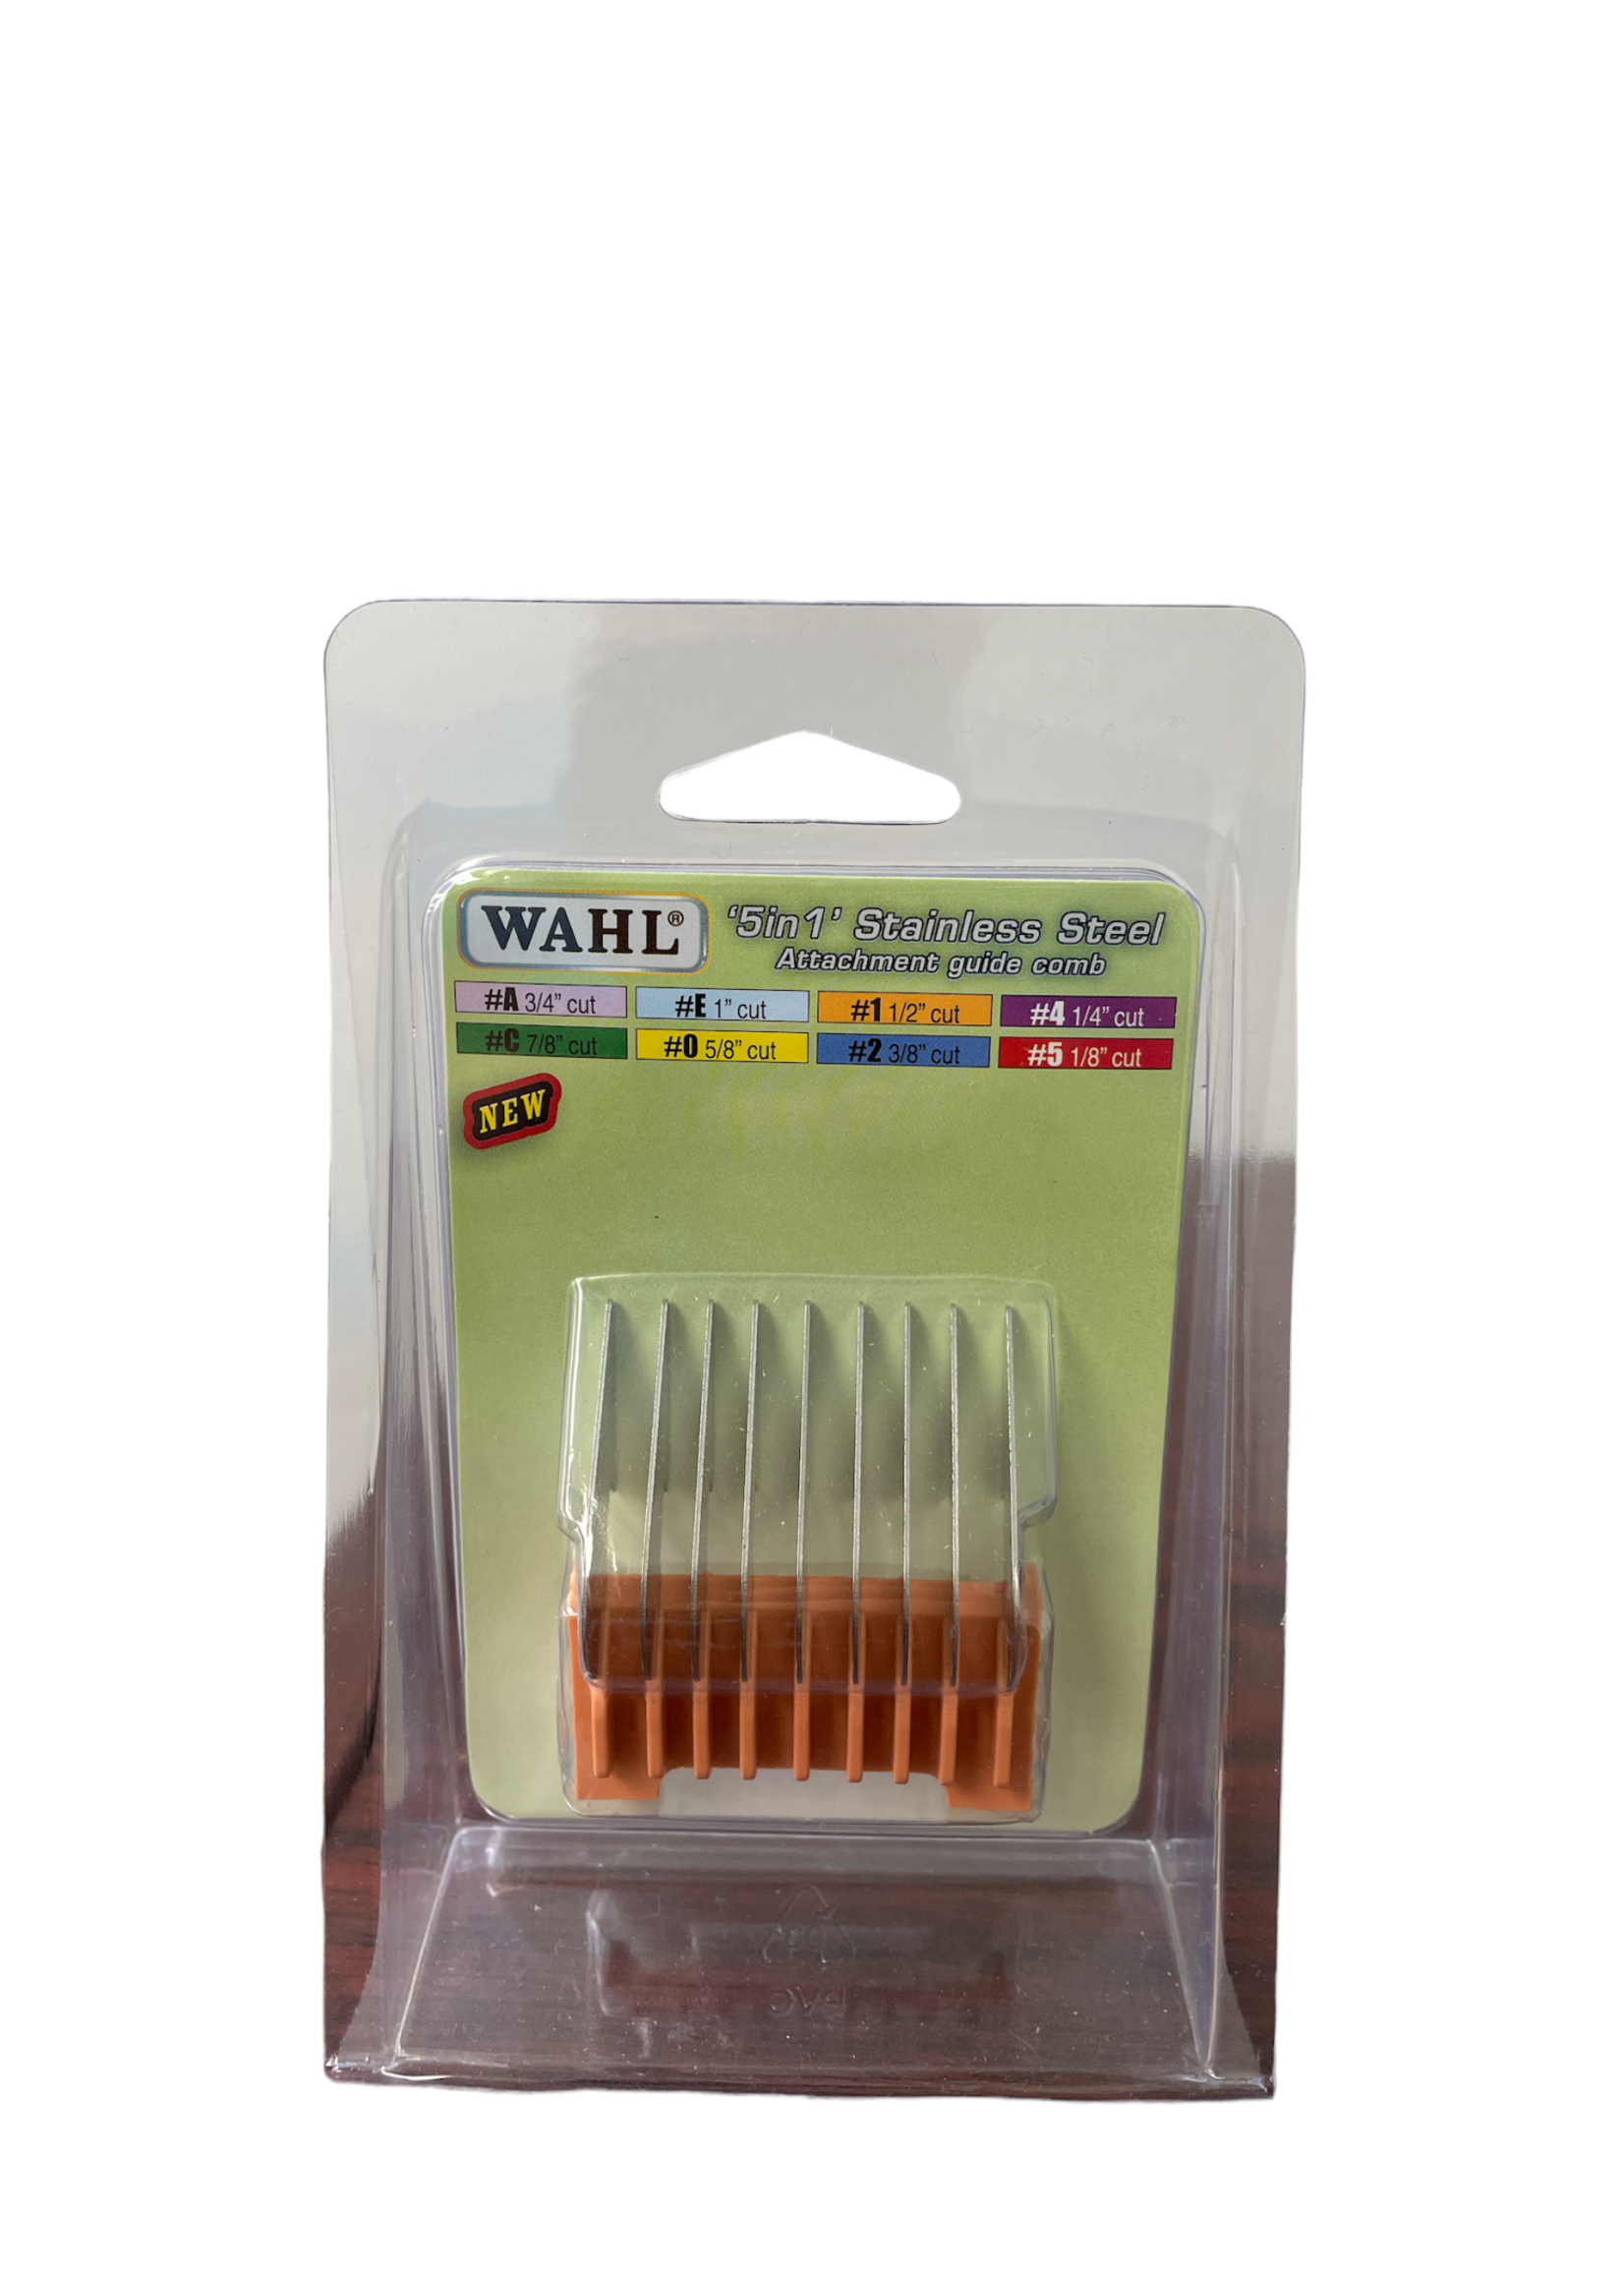 Wahl Wahl #1 comb for 5" in 1" blade-orange.